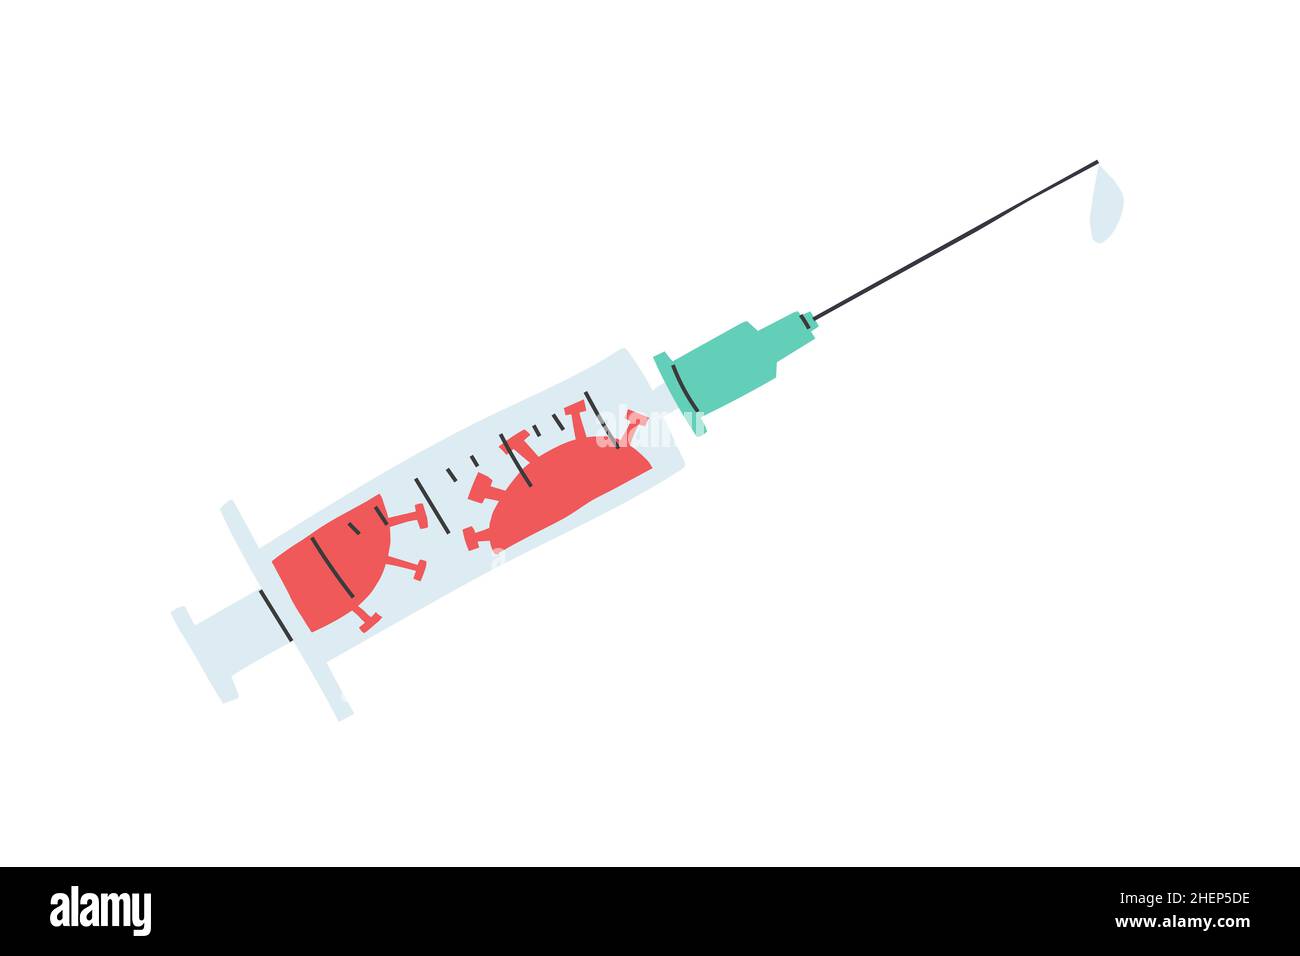 Vaccin contre le coronavirus en seringue.Image symbolique d'un vaccin. Illustration de Vecteur